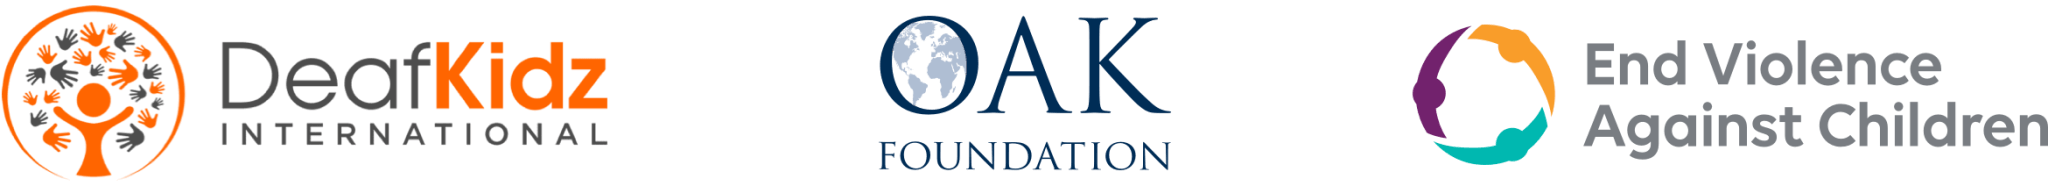 DeafKidz International, Oak Foundation and End Violence Against Children logos